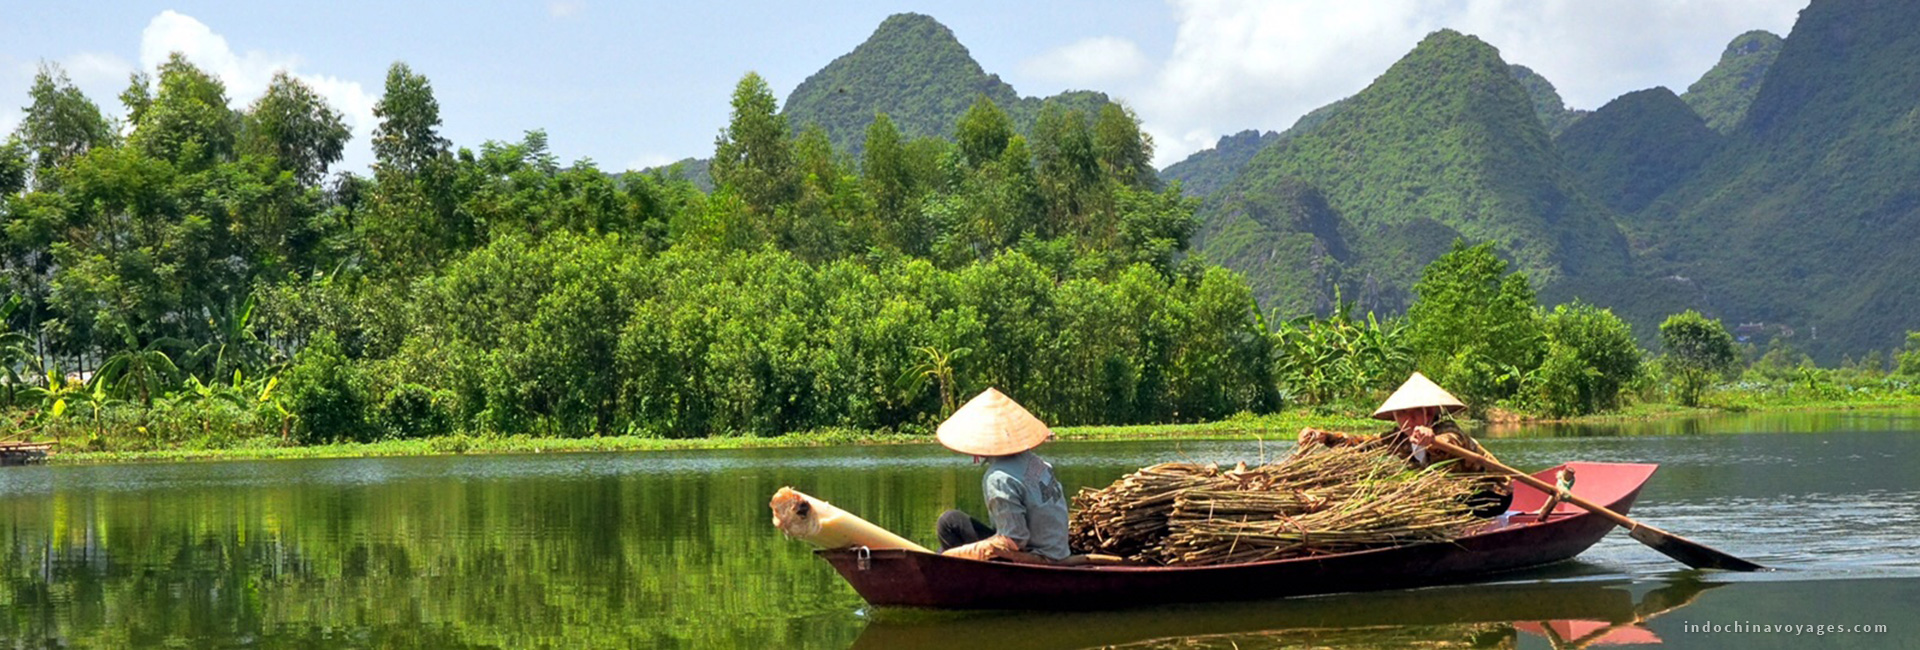 mekong river cruise 2021